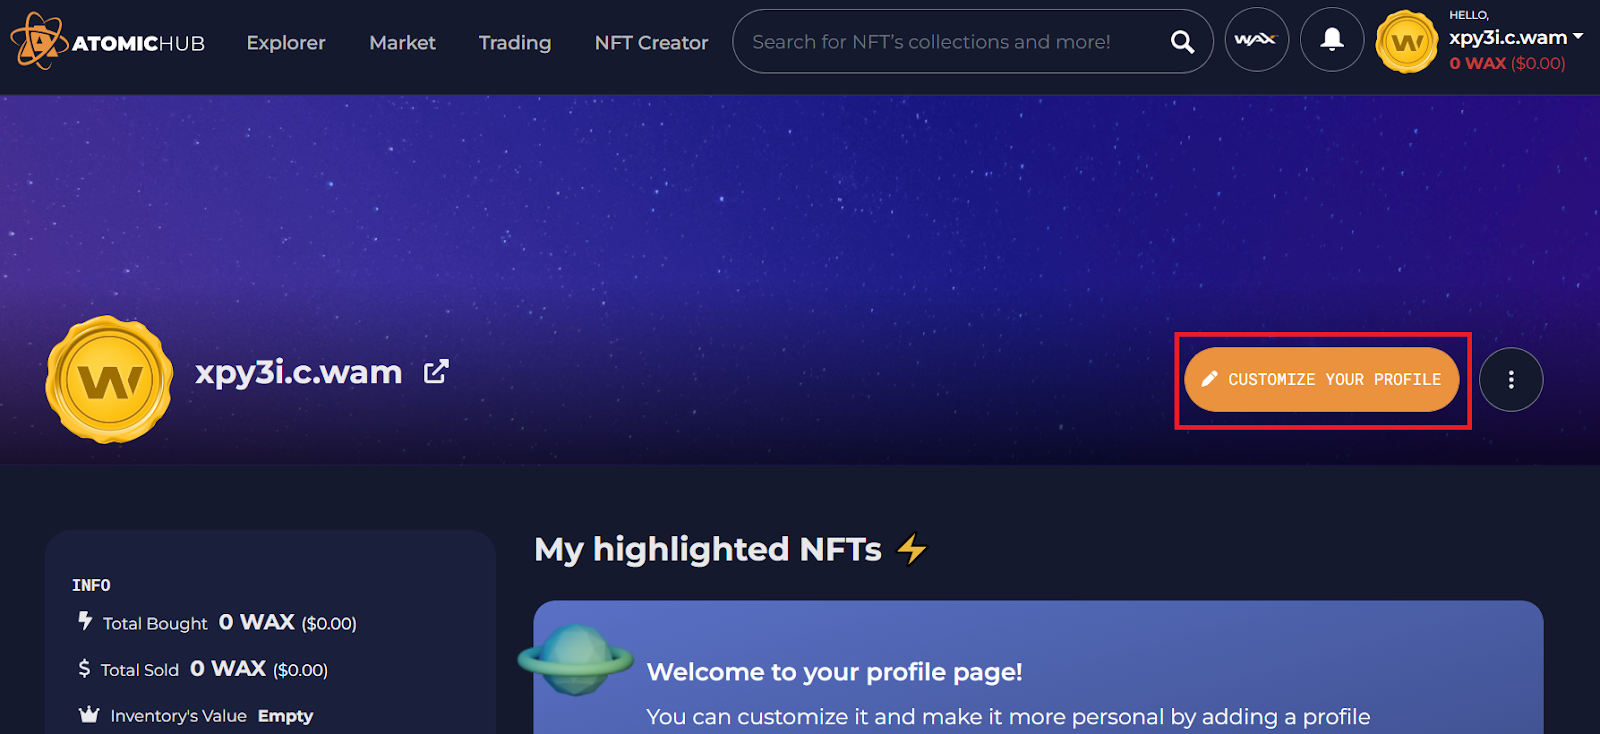 Chọn Customize your profile trong mục profile để sửa Bio.